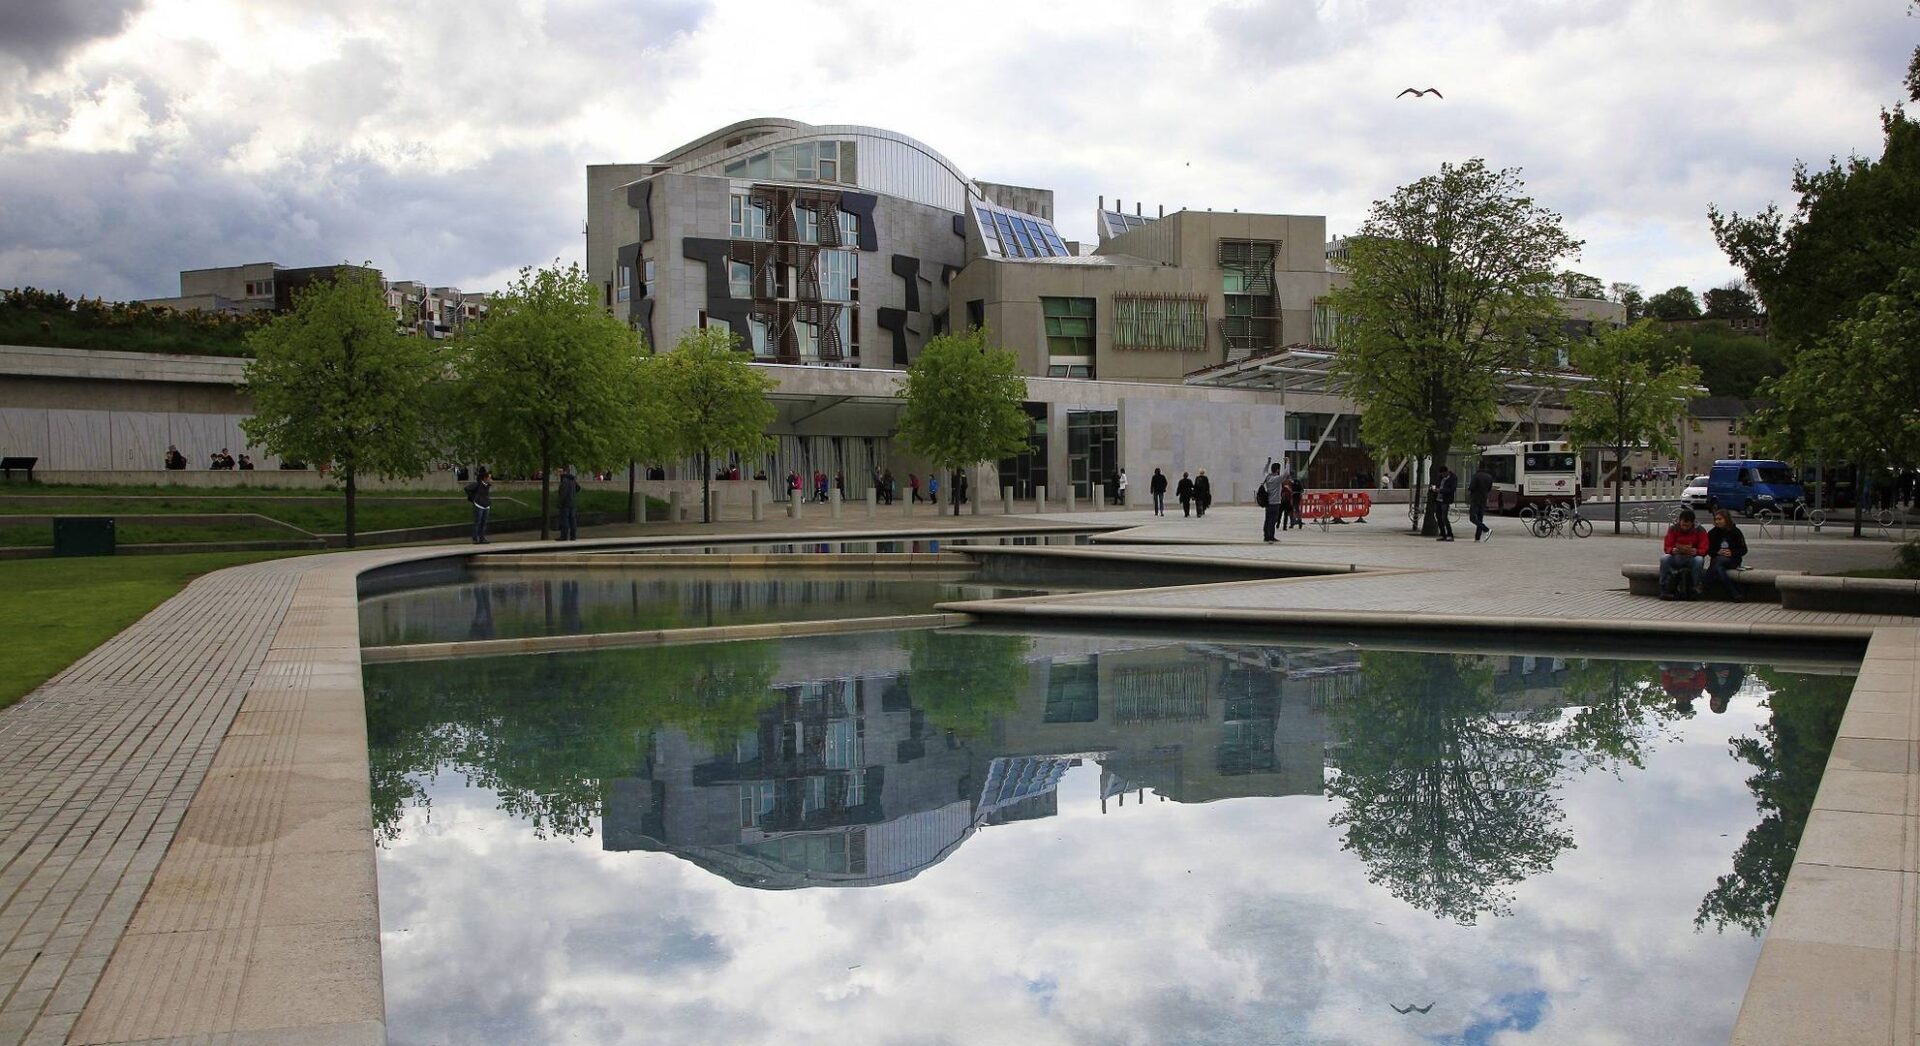 Scottish Parliament with pond